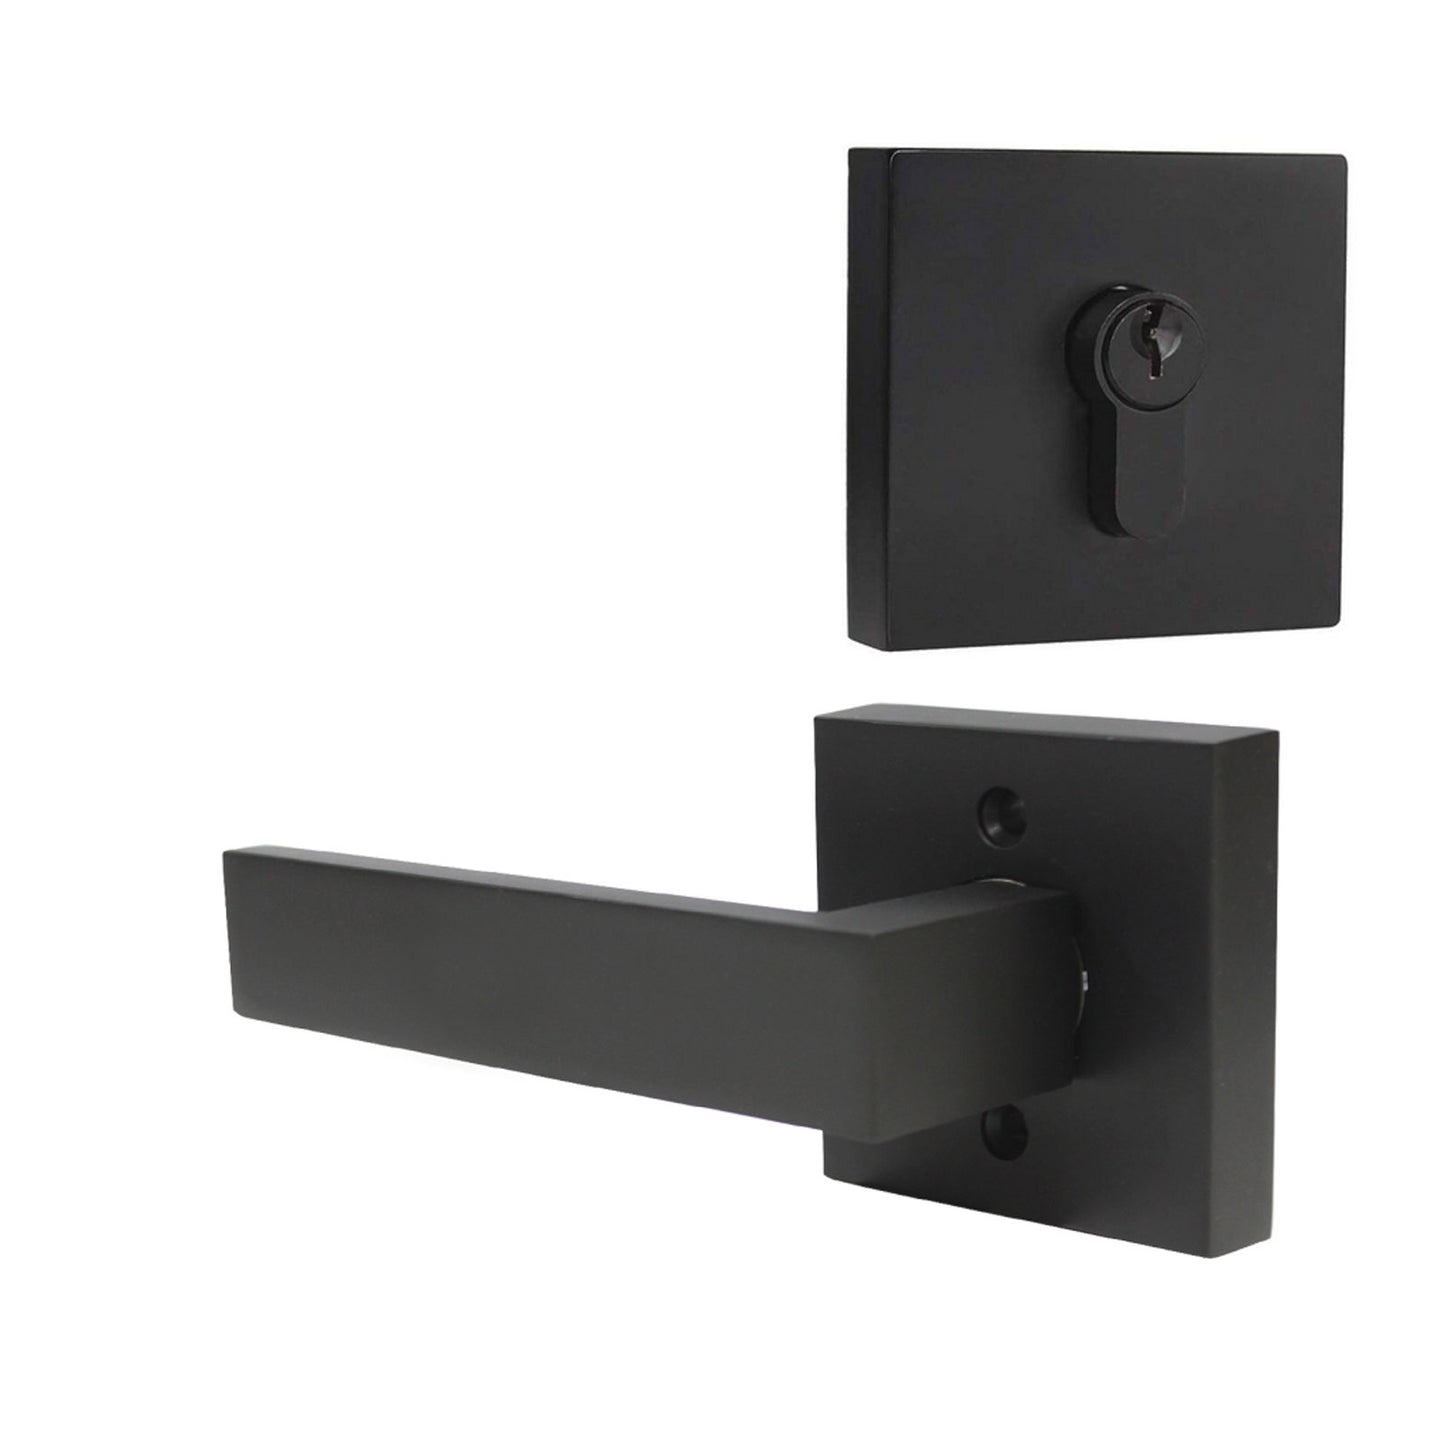 Passage Door Levers and Double Cylinder Deadbolts Lock Set (Keyed Alike), Black Finish - Probrico